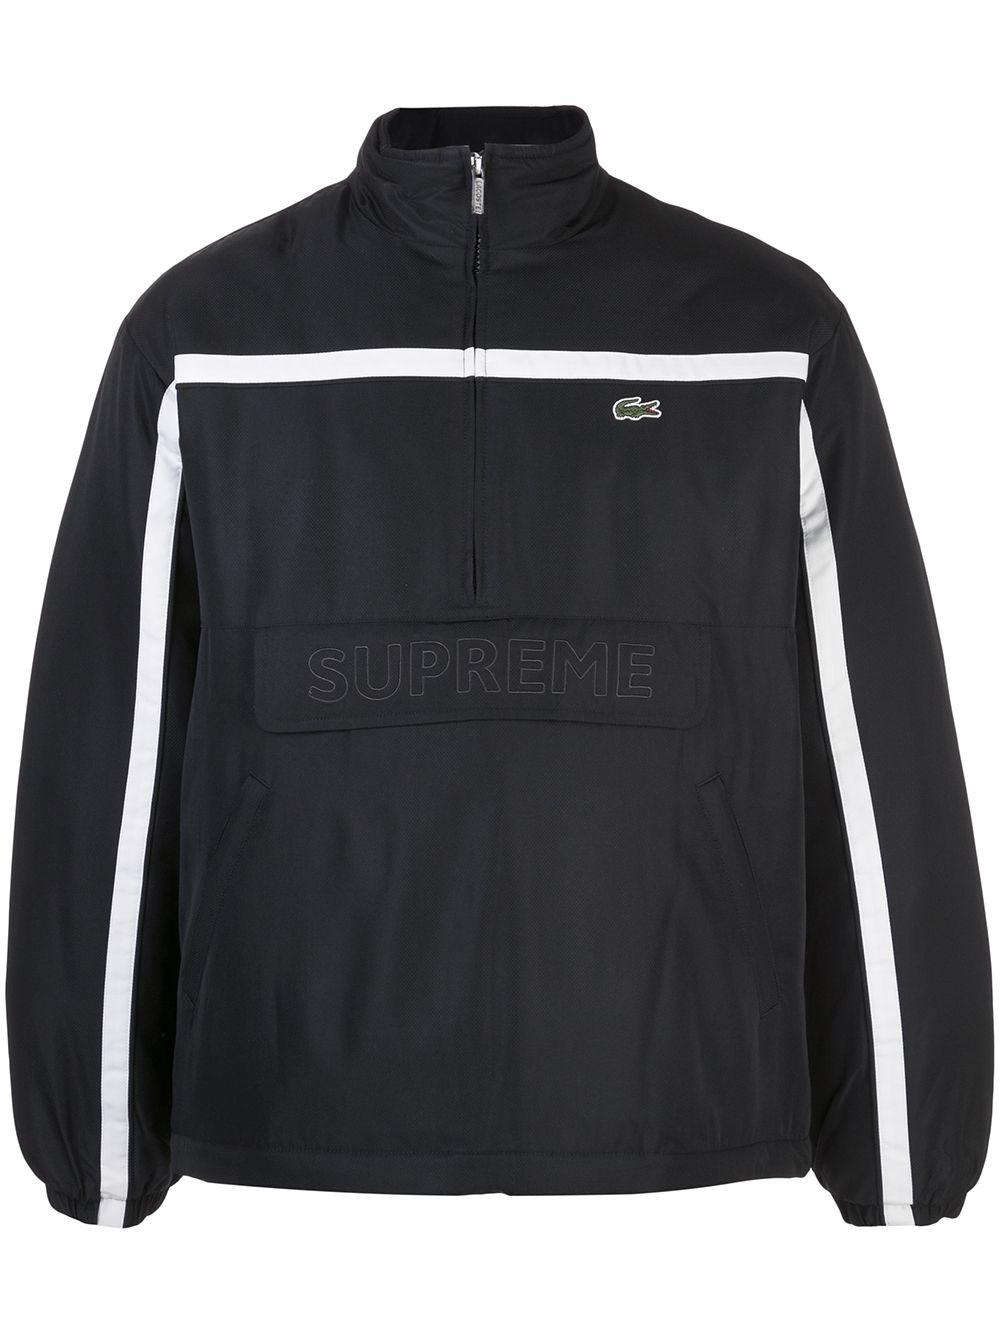 Supreme X Lacoste Puffy Half Zip Pullover Windbreaker in Black for 